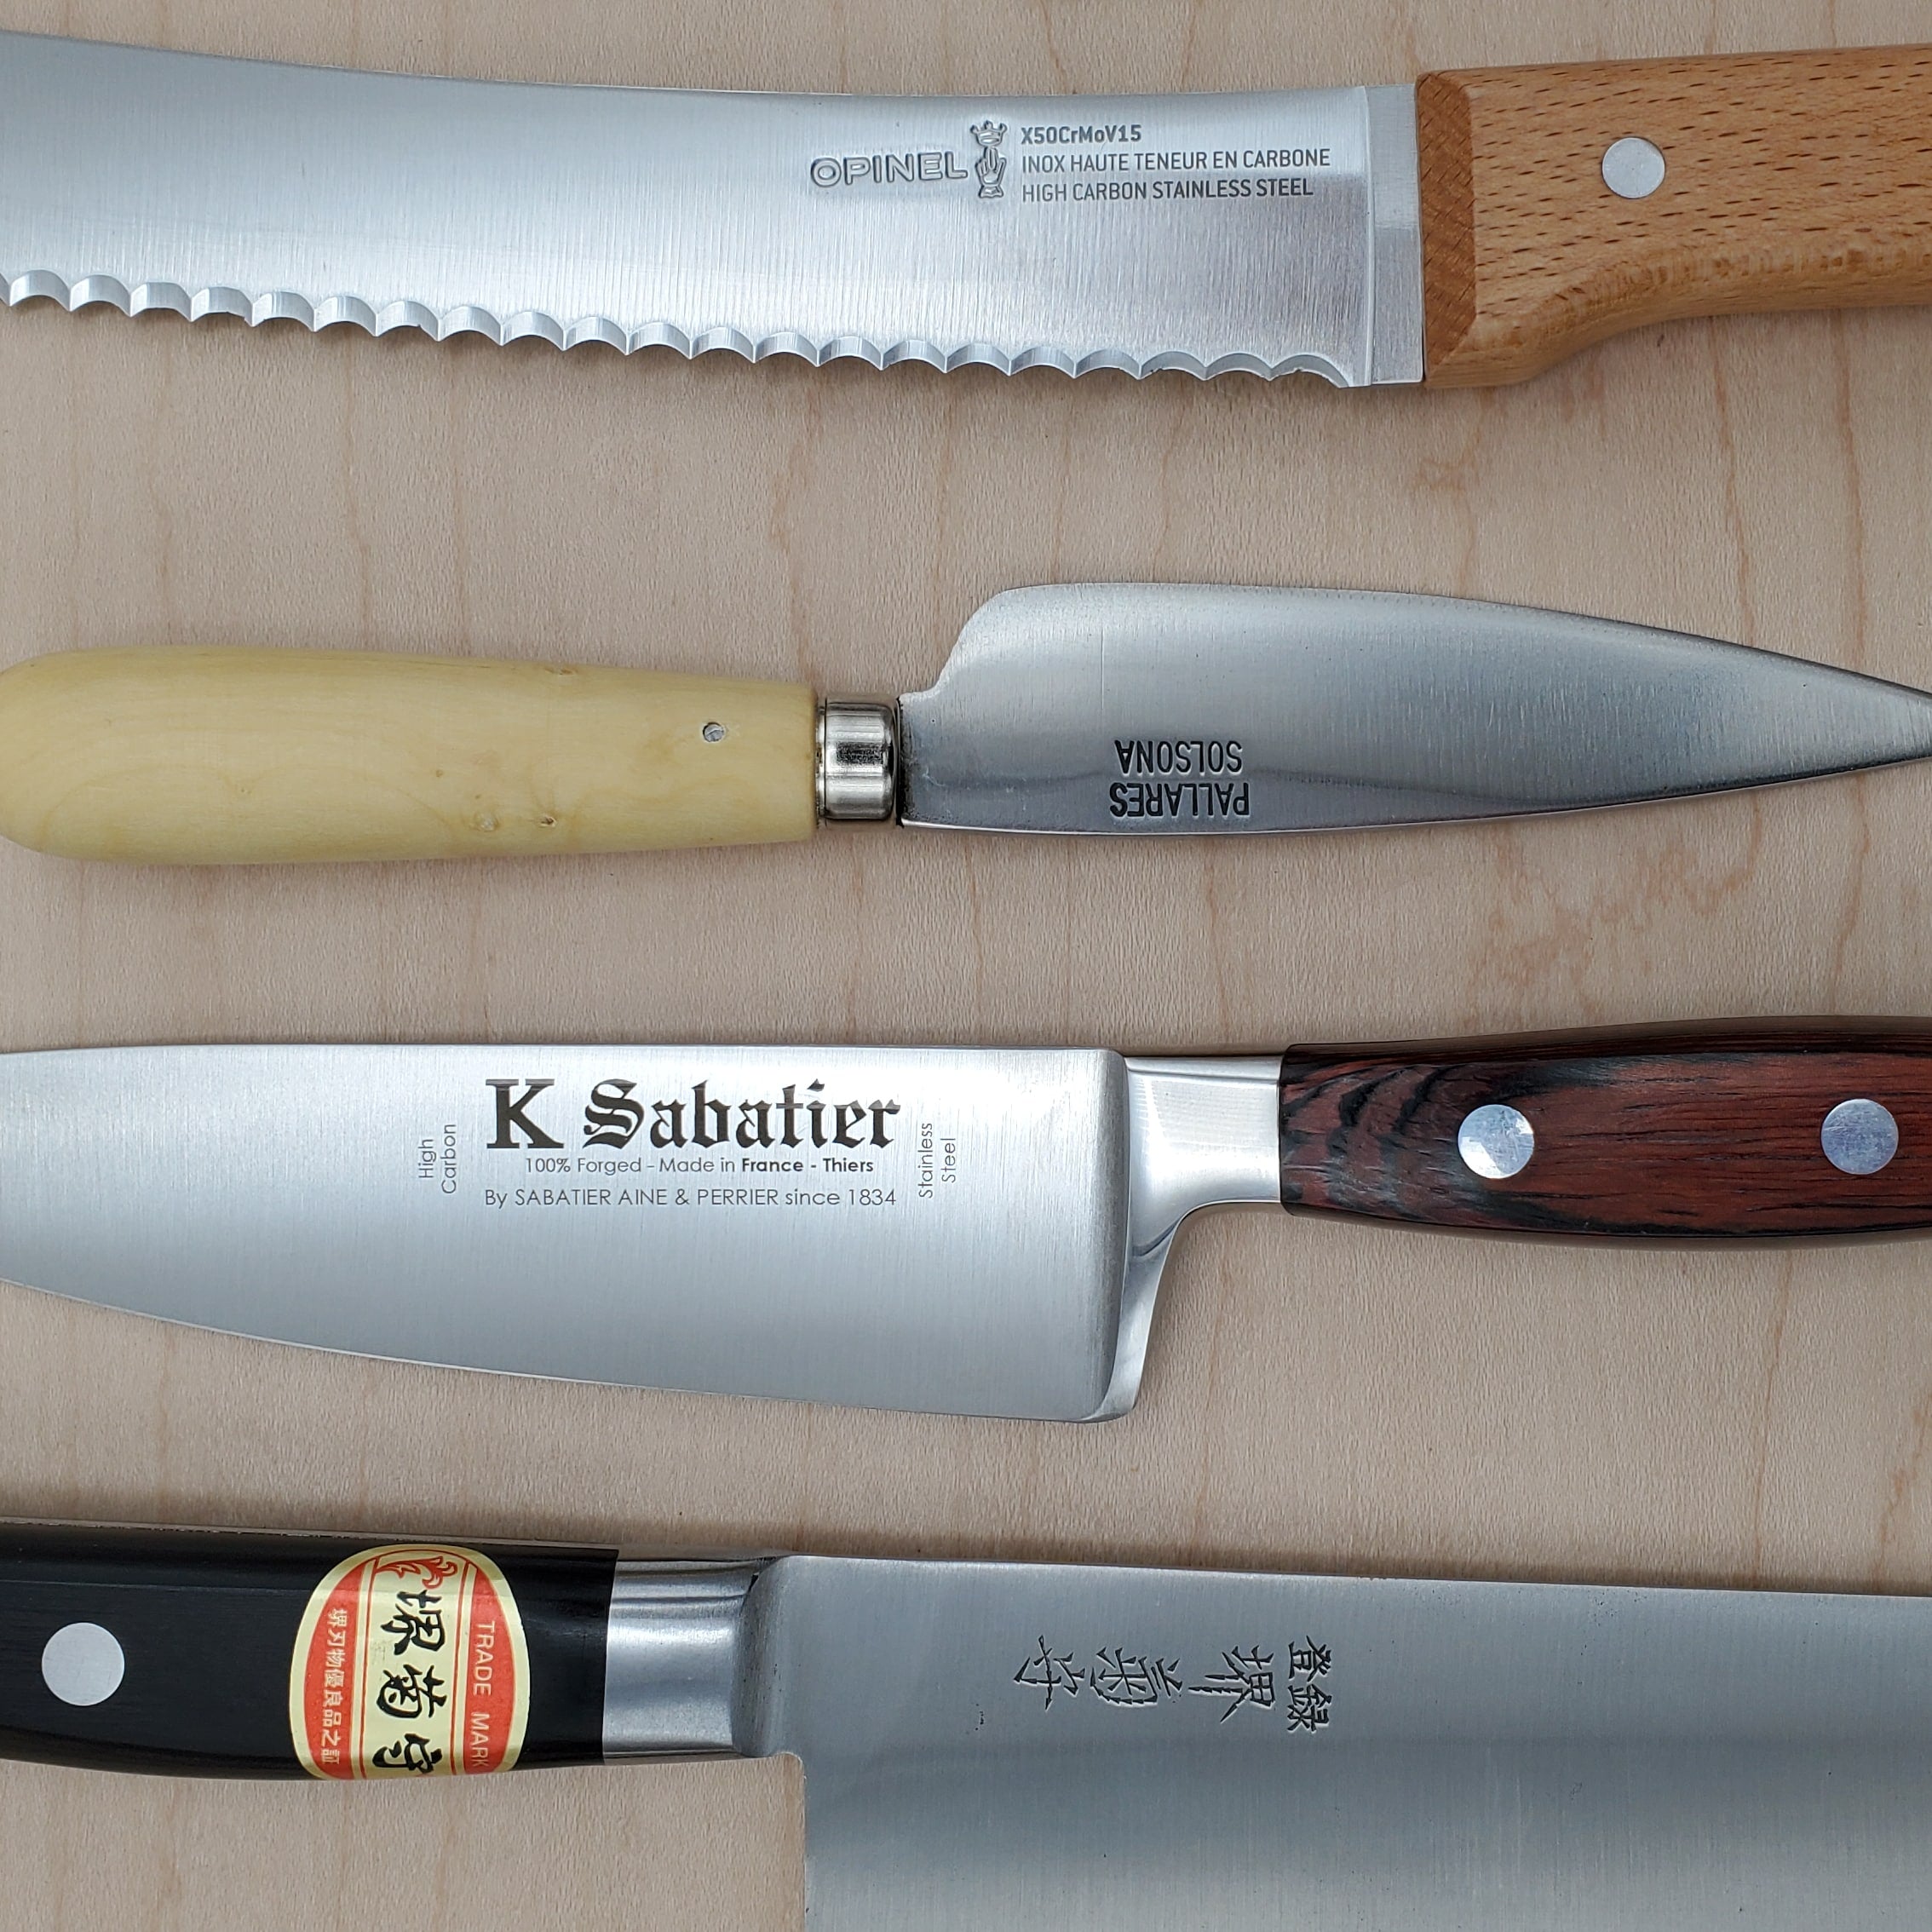 Masahiro TX-103 Kitchen Chinese Chef Knife 7.7 inch 3 Layers SEKI